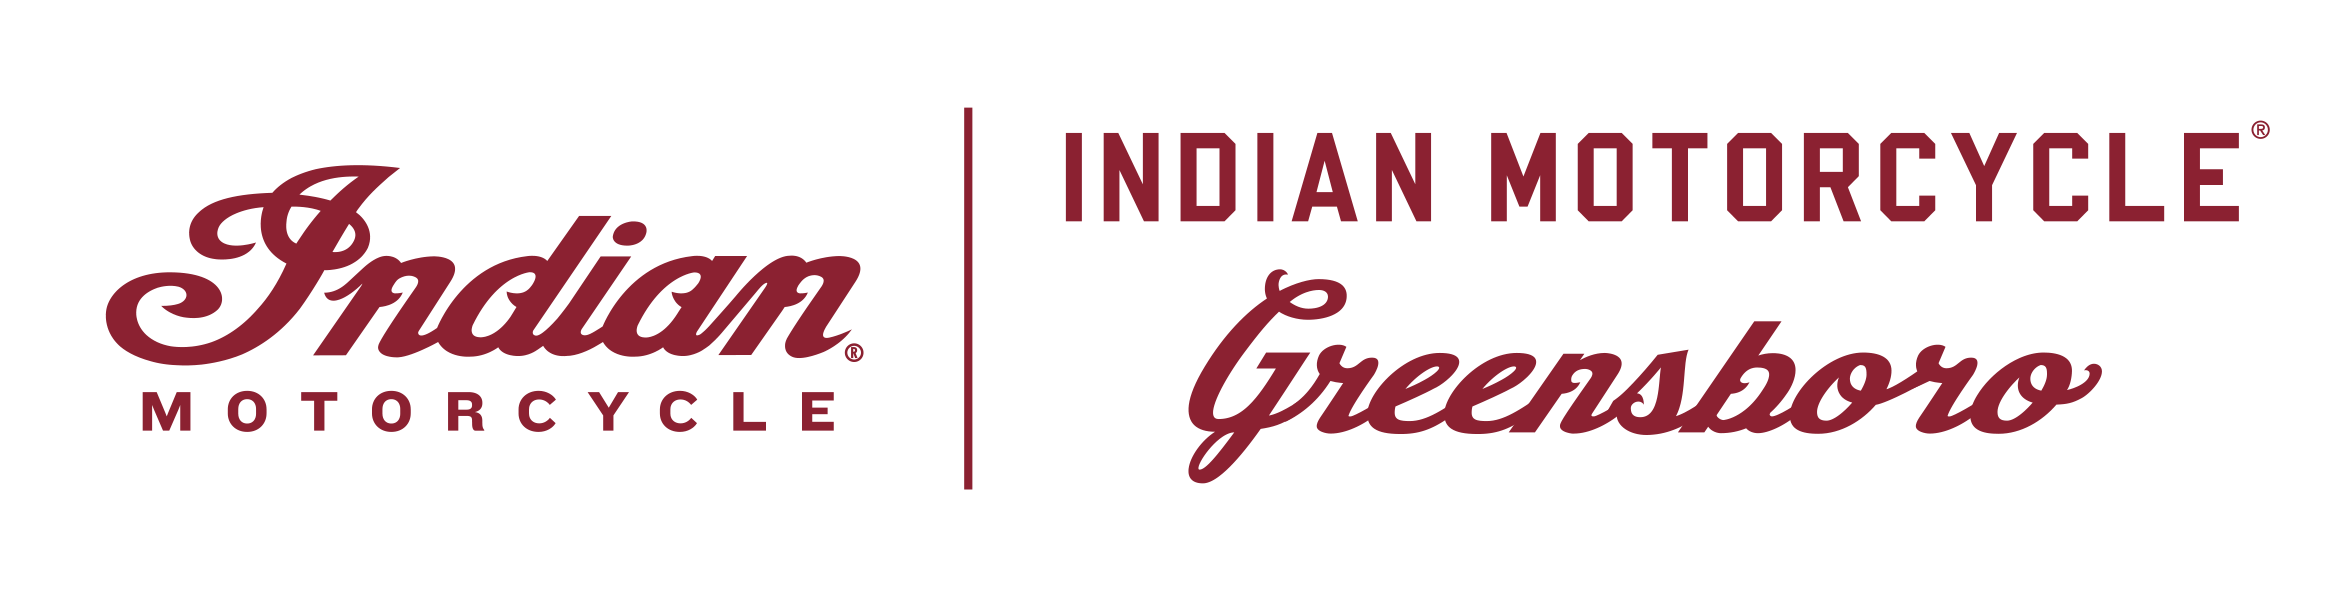 Indian Motorcycle of Greensboro